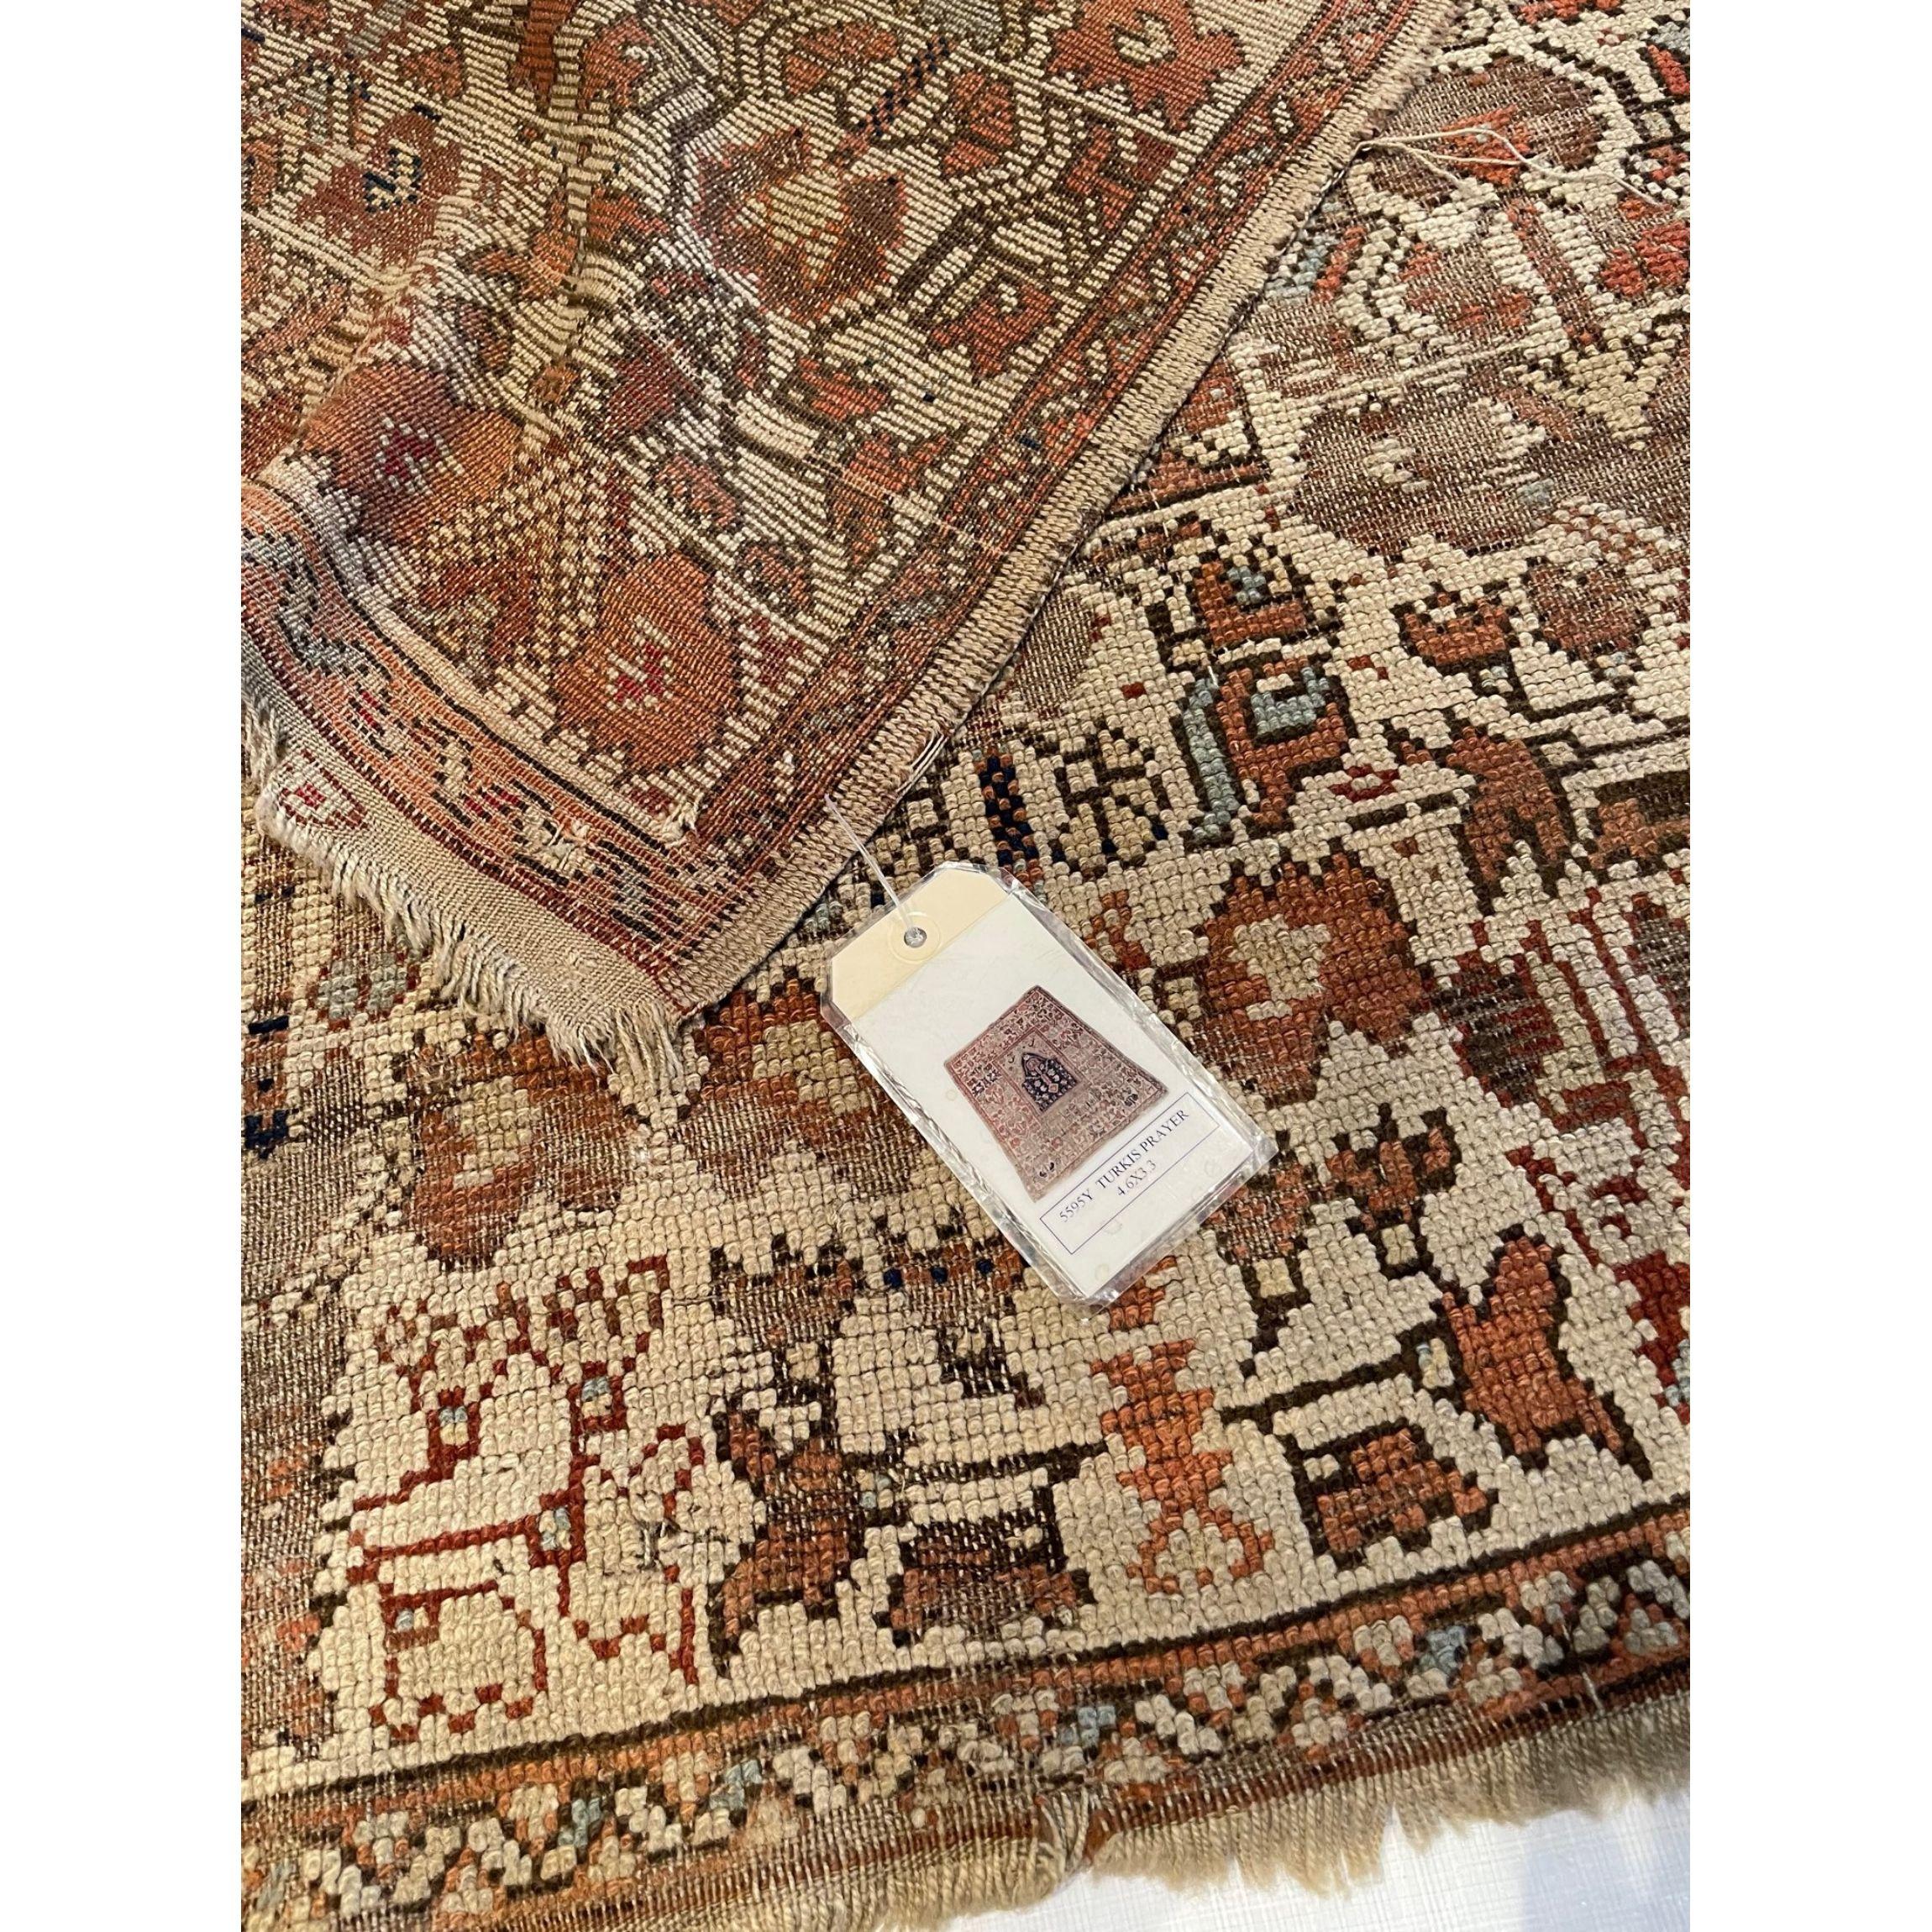 Other Antique Turkish Prayer Rug 4.6x3.3 For Sale